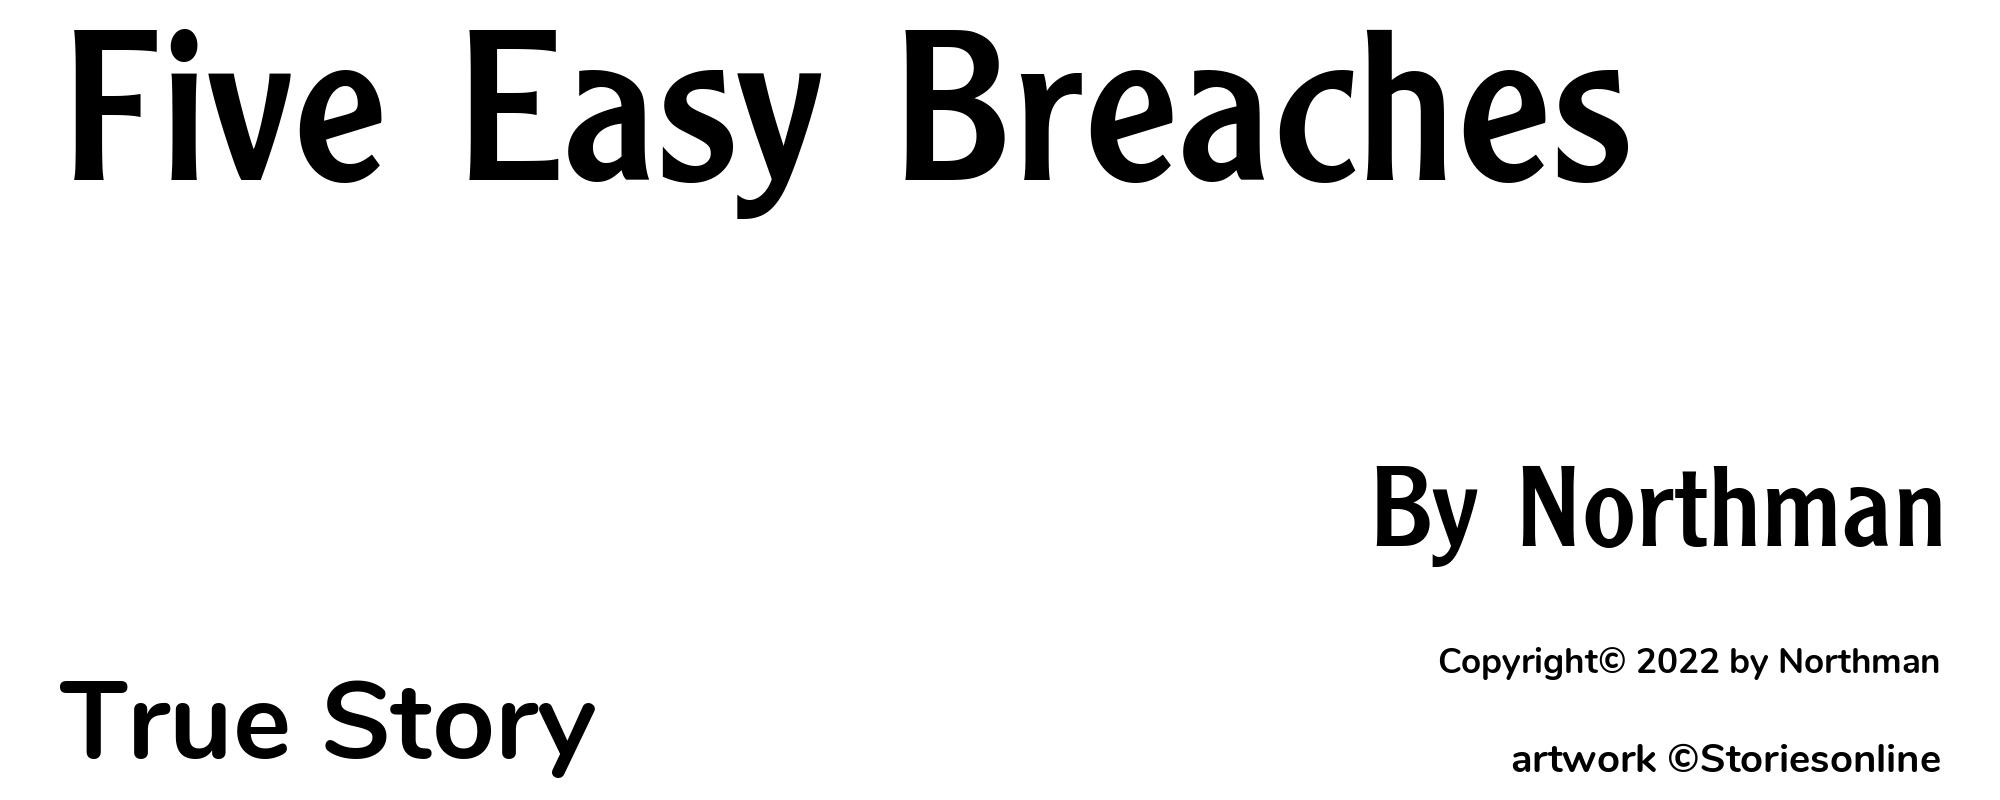 Five Easy Breaches - Cover